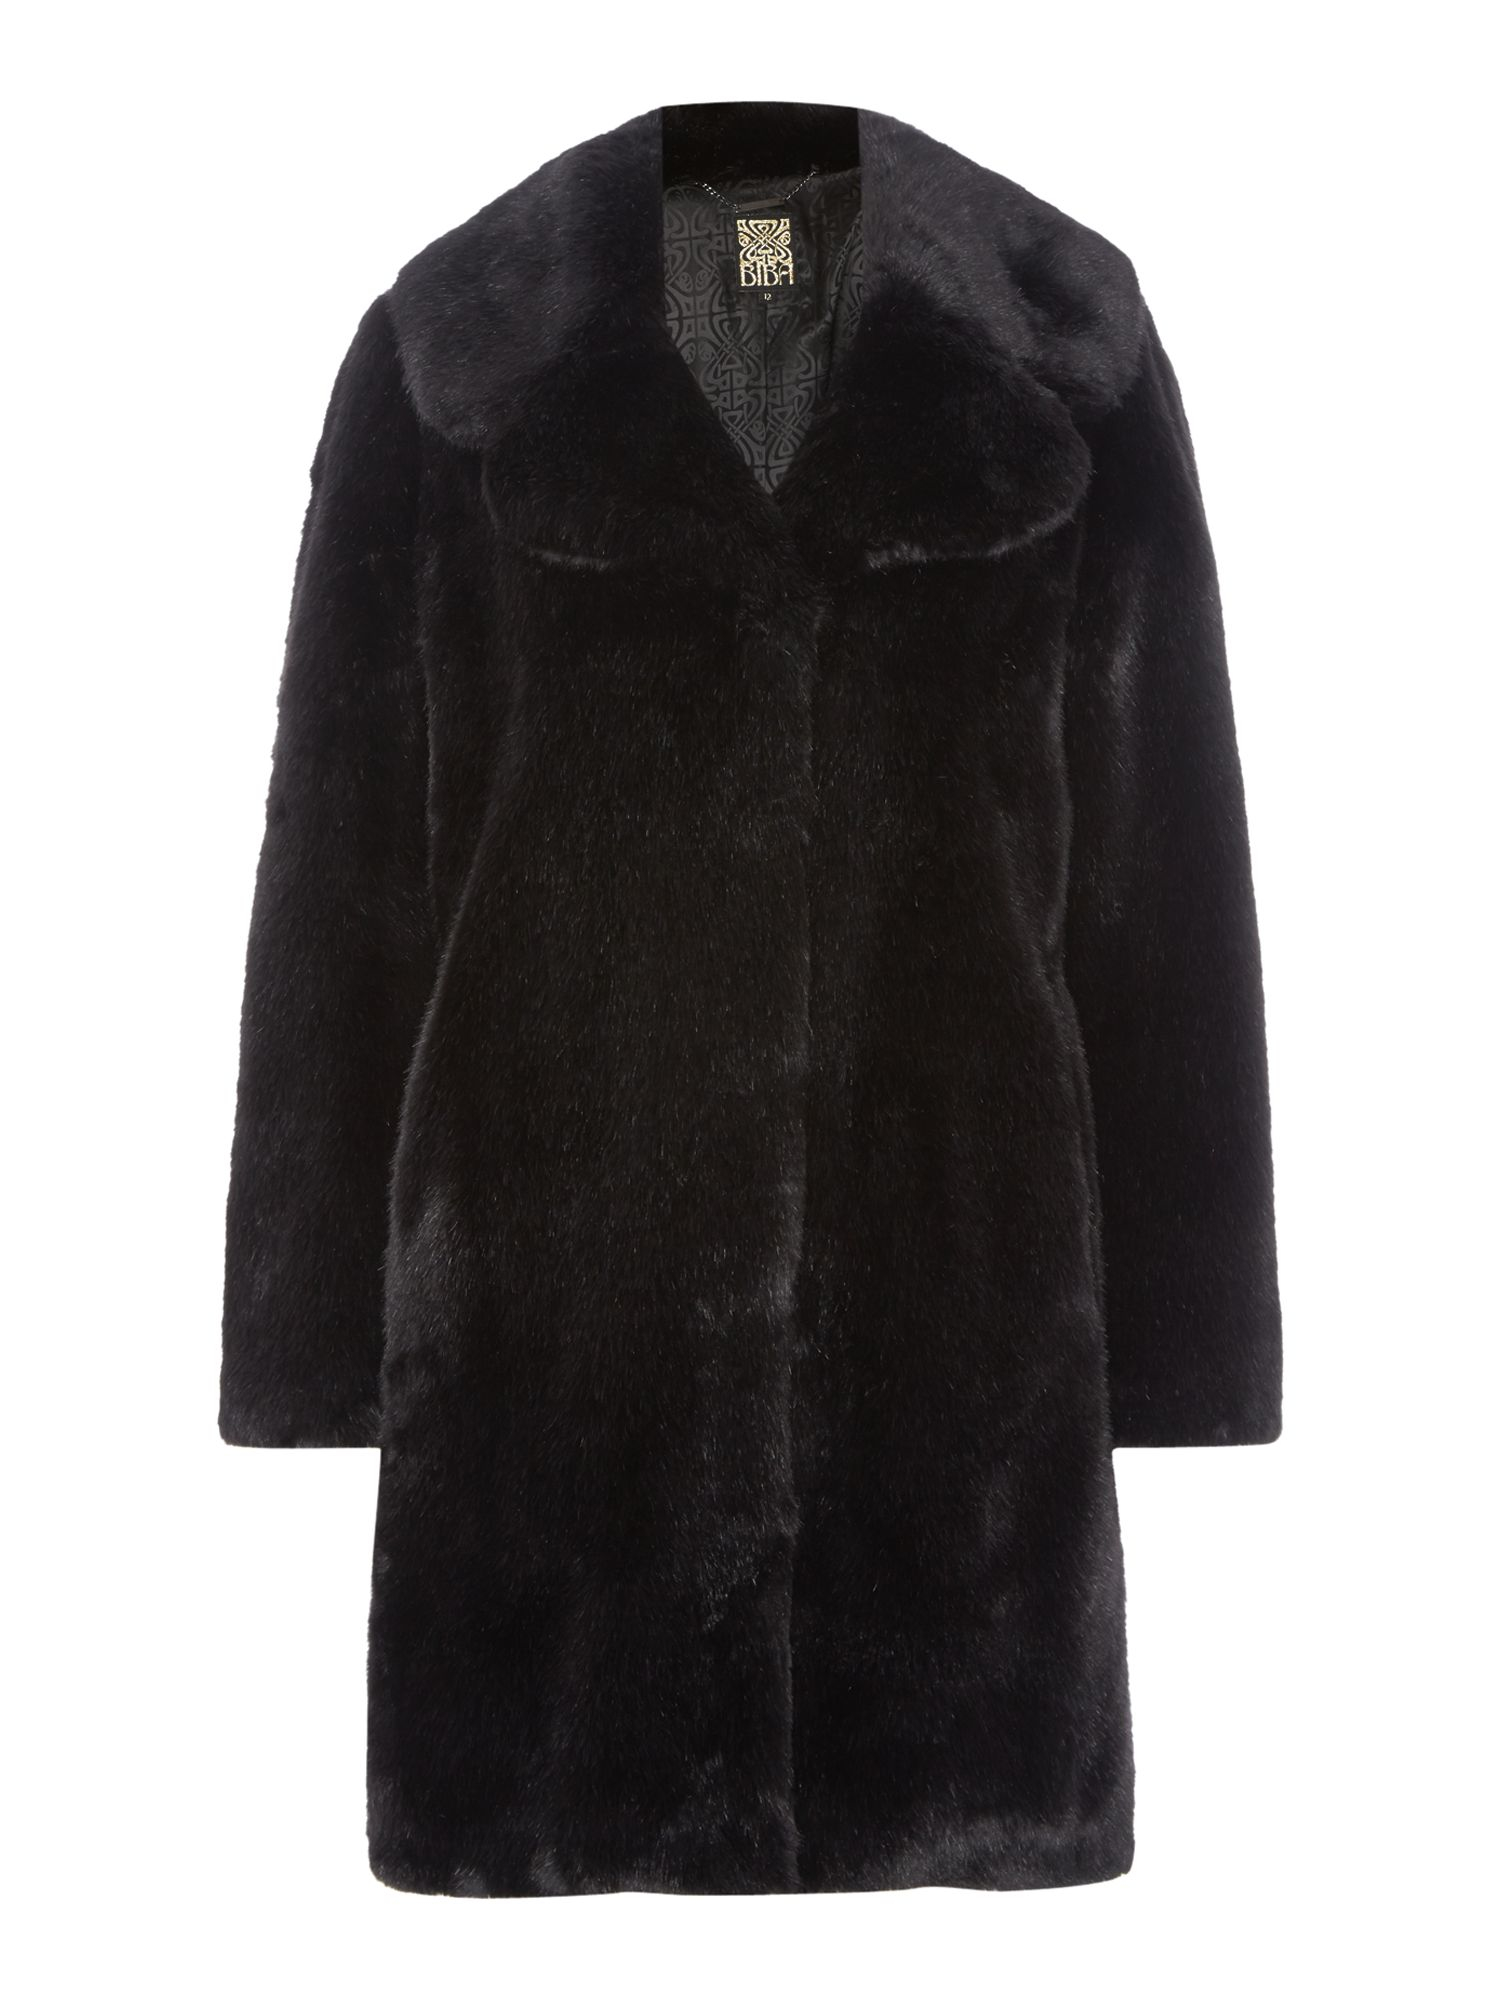 Biba Large Portobello Faux Fur Coat in Black | Lyst